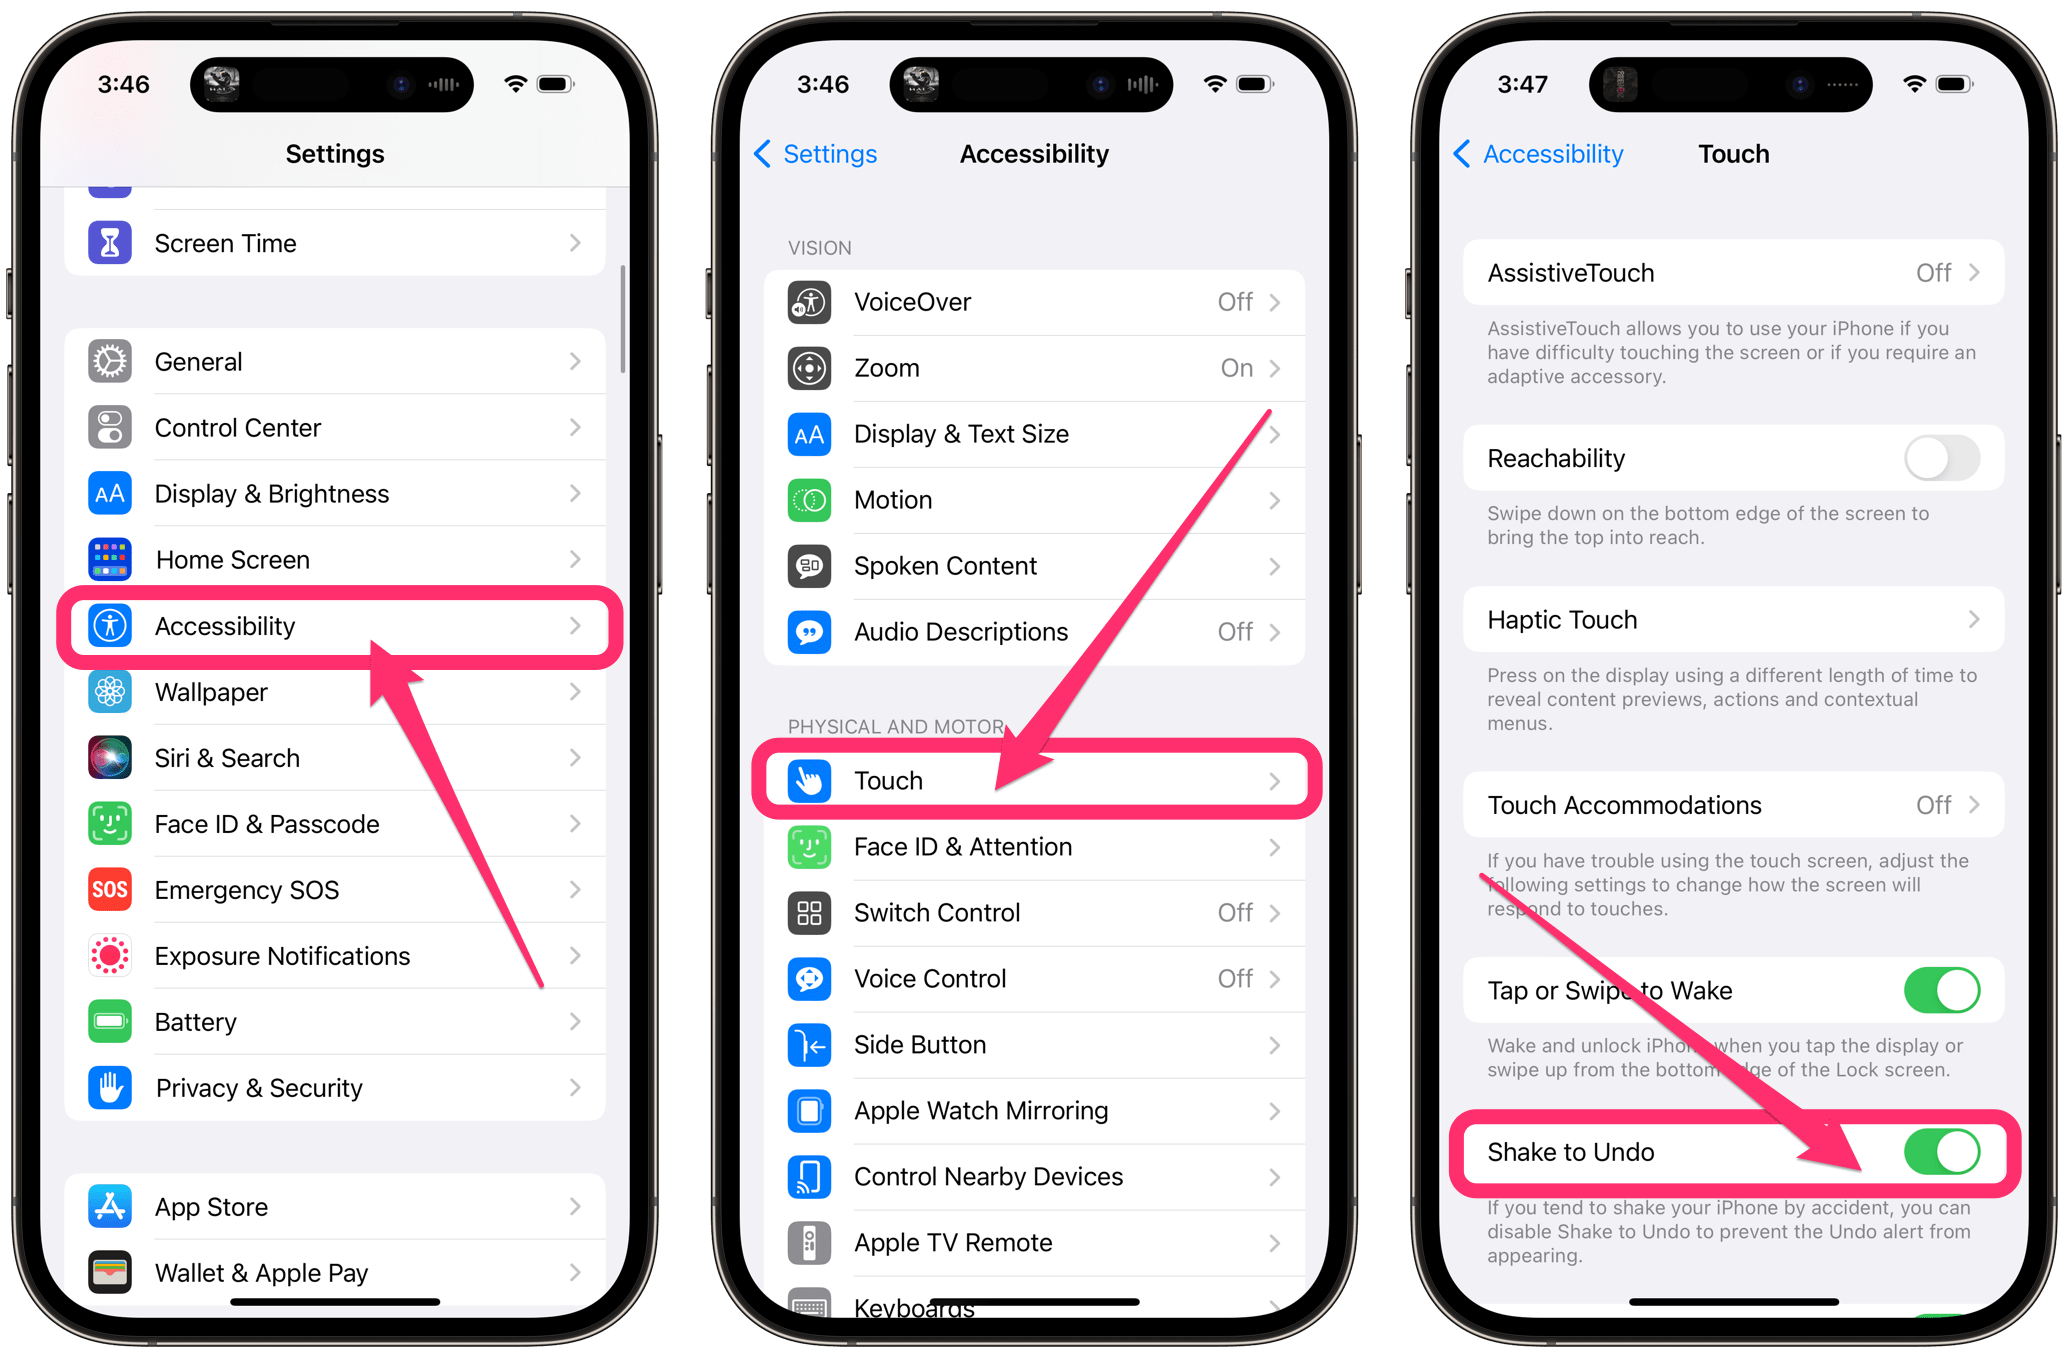 shake to undo in settings on iPhone